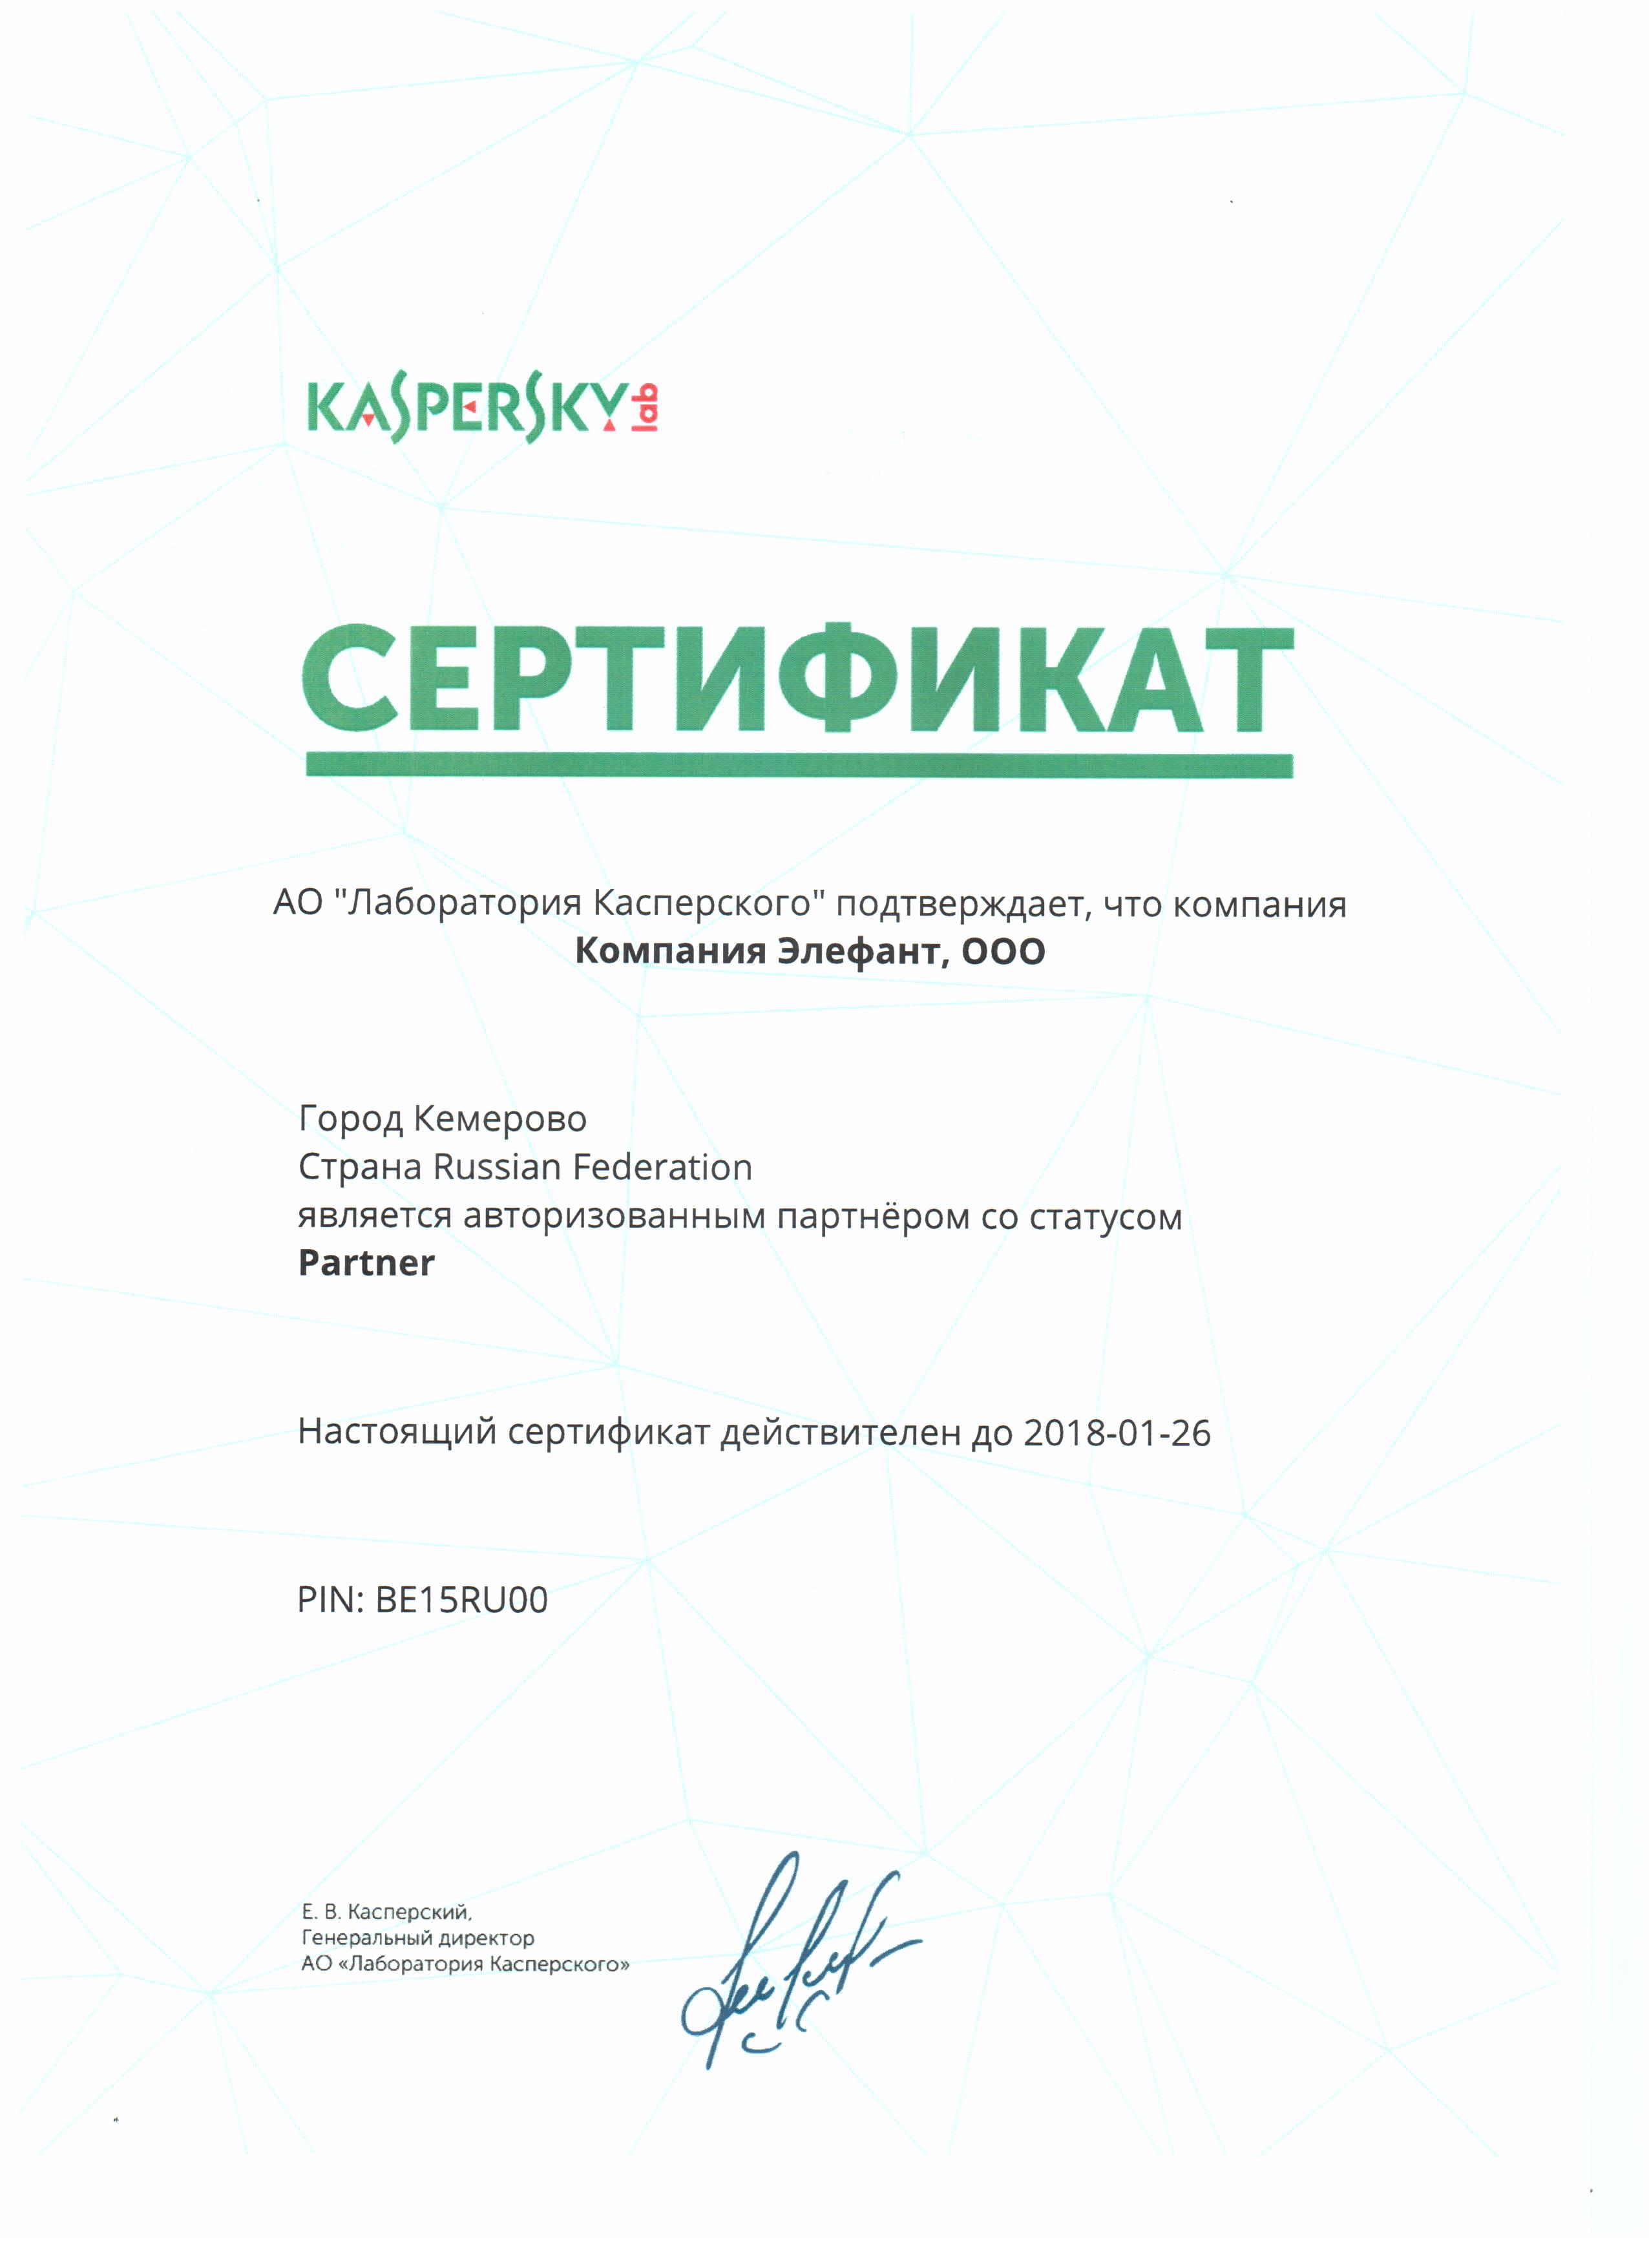 Сертификат от "Лаборатории Касперского"